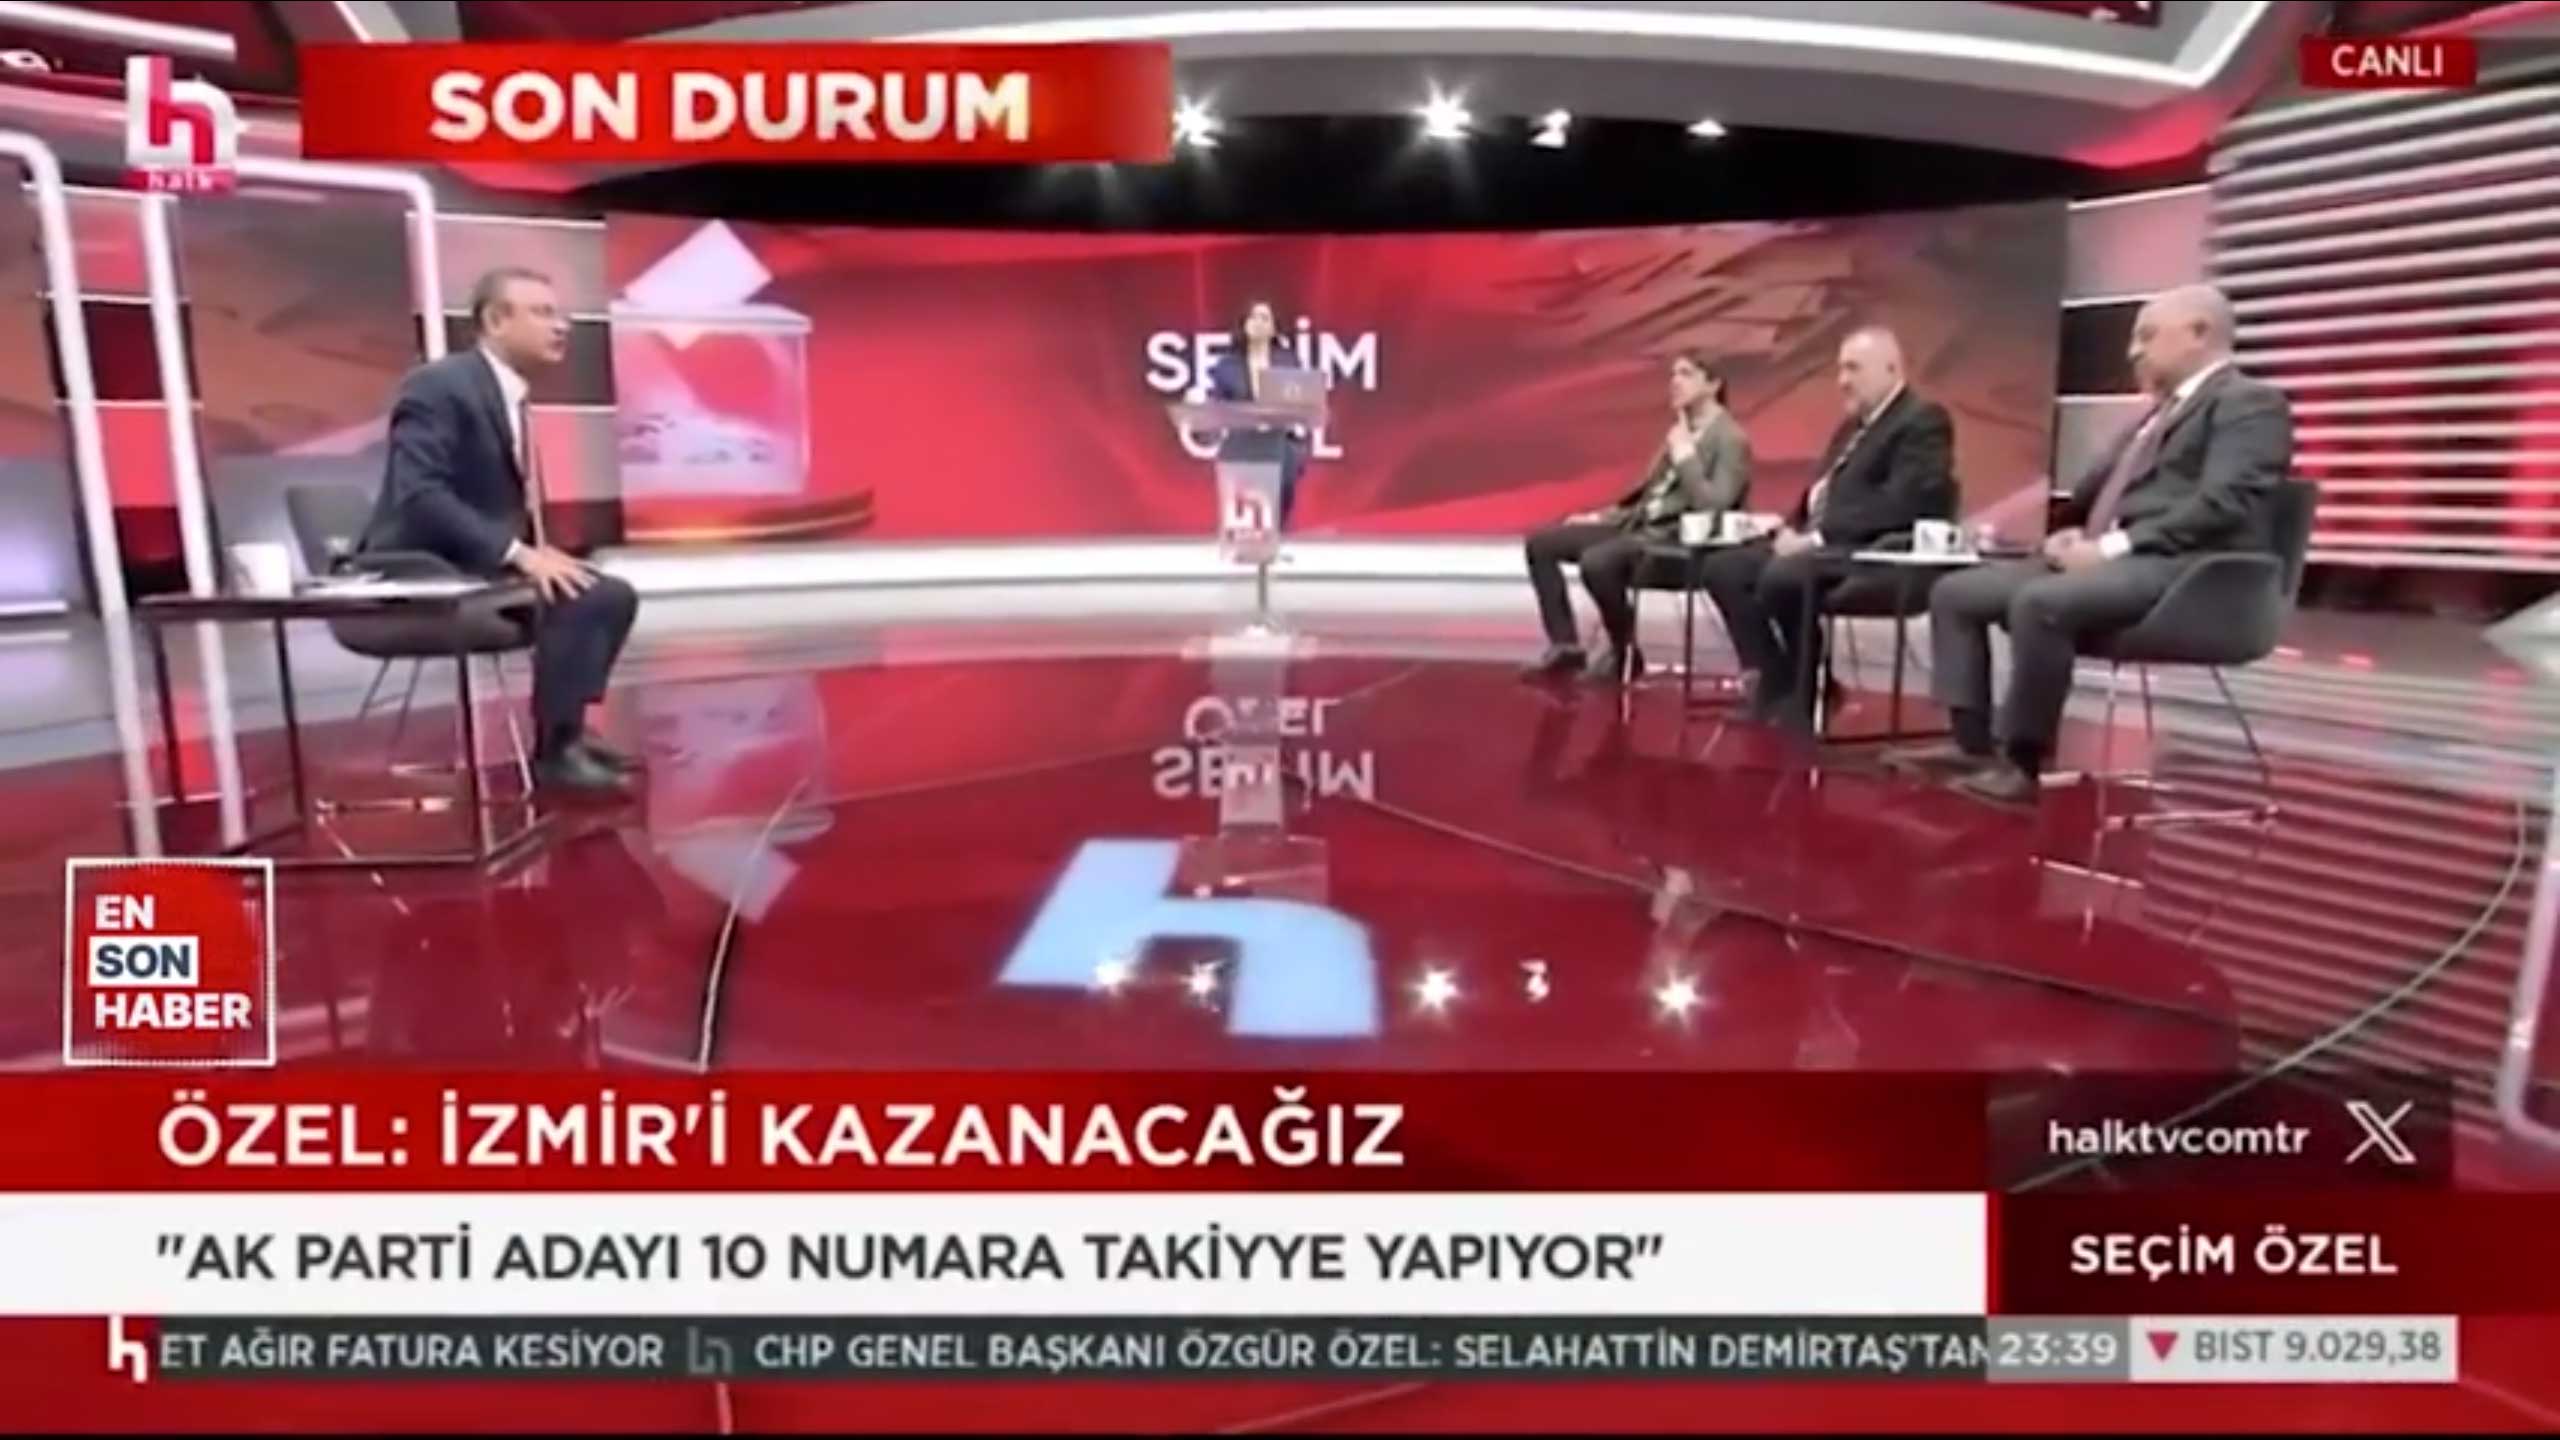 Halk Tv Chp Ozgur Ozel